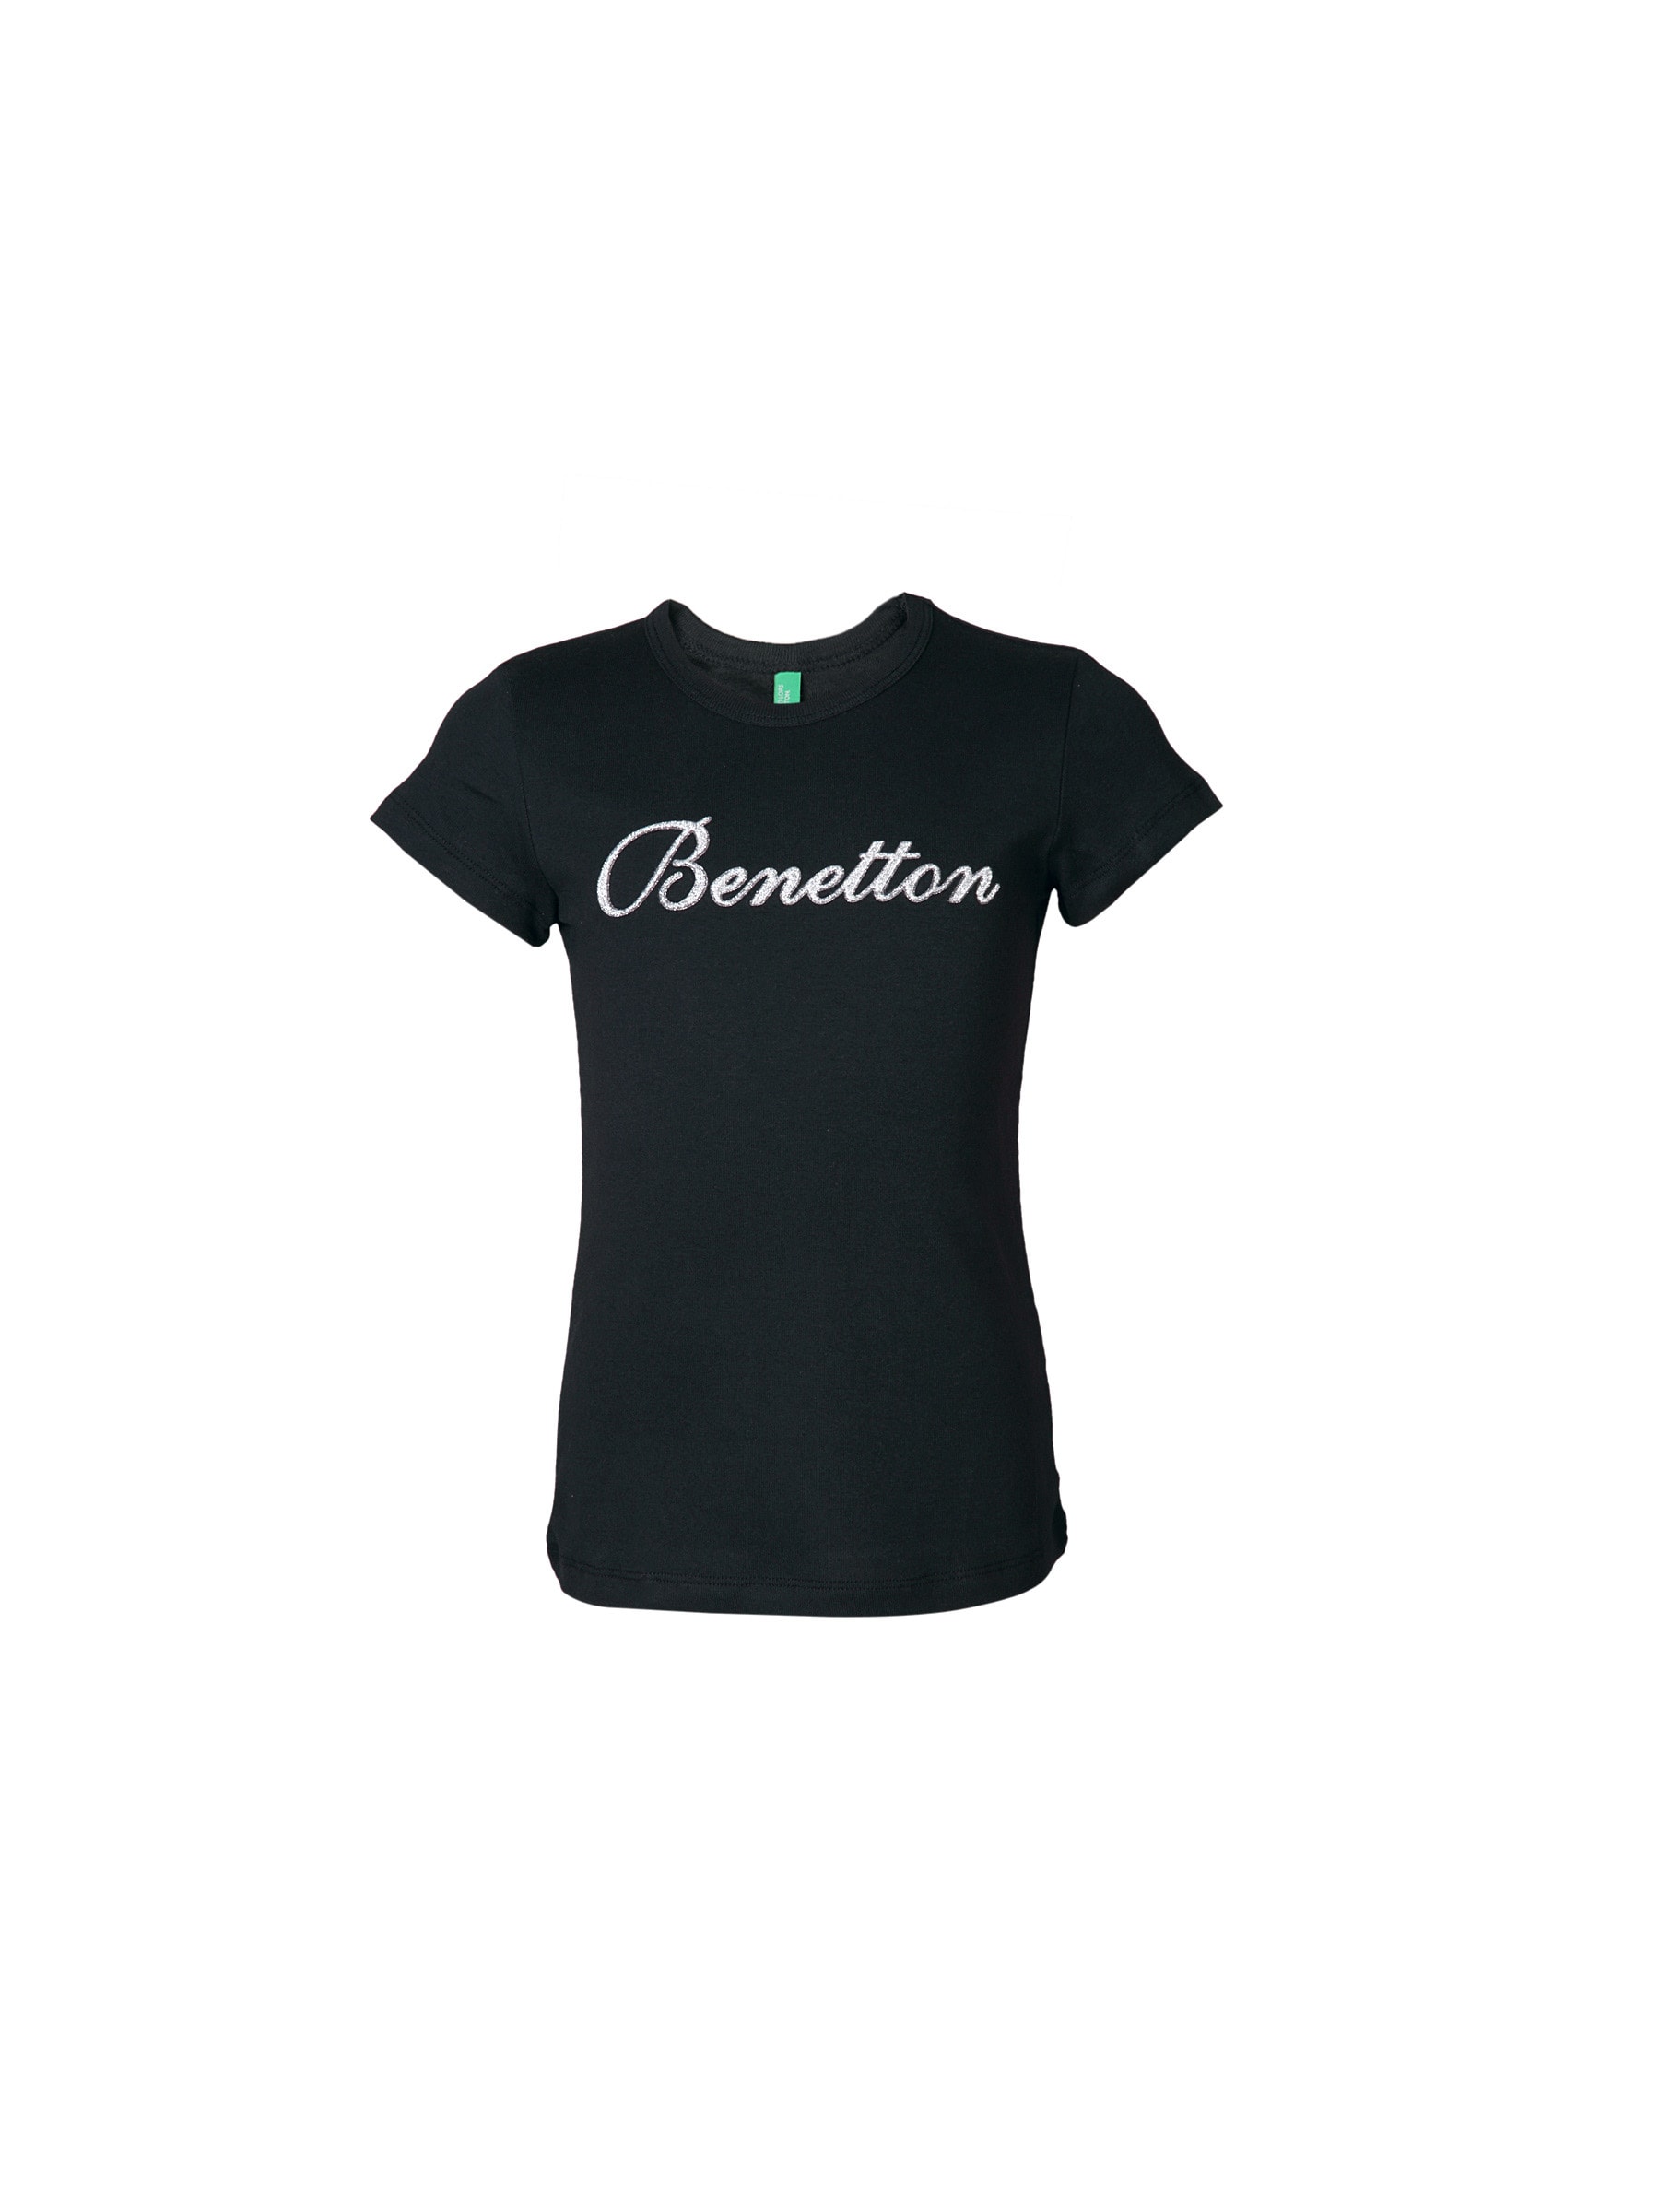 United Colors of Benetton Kids Girls Black Top